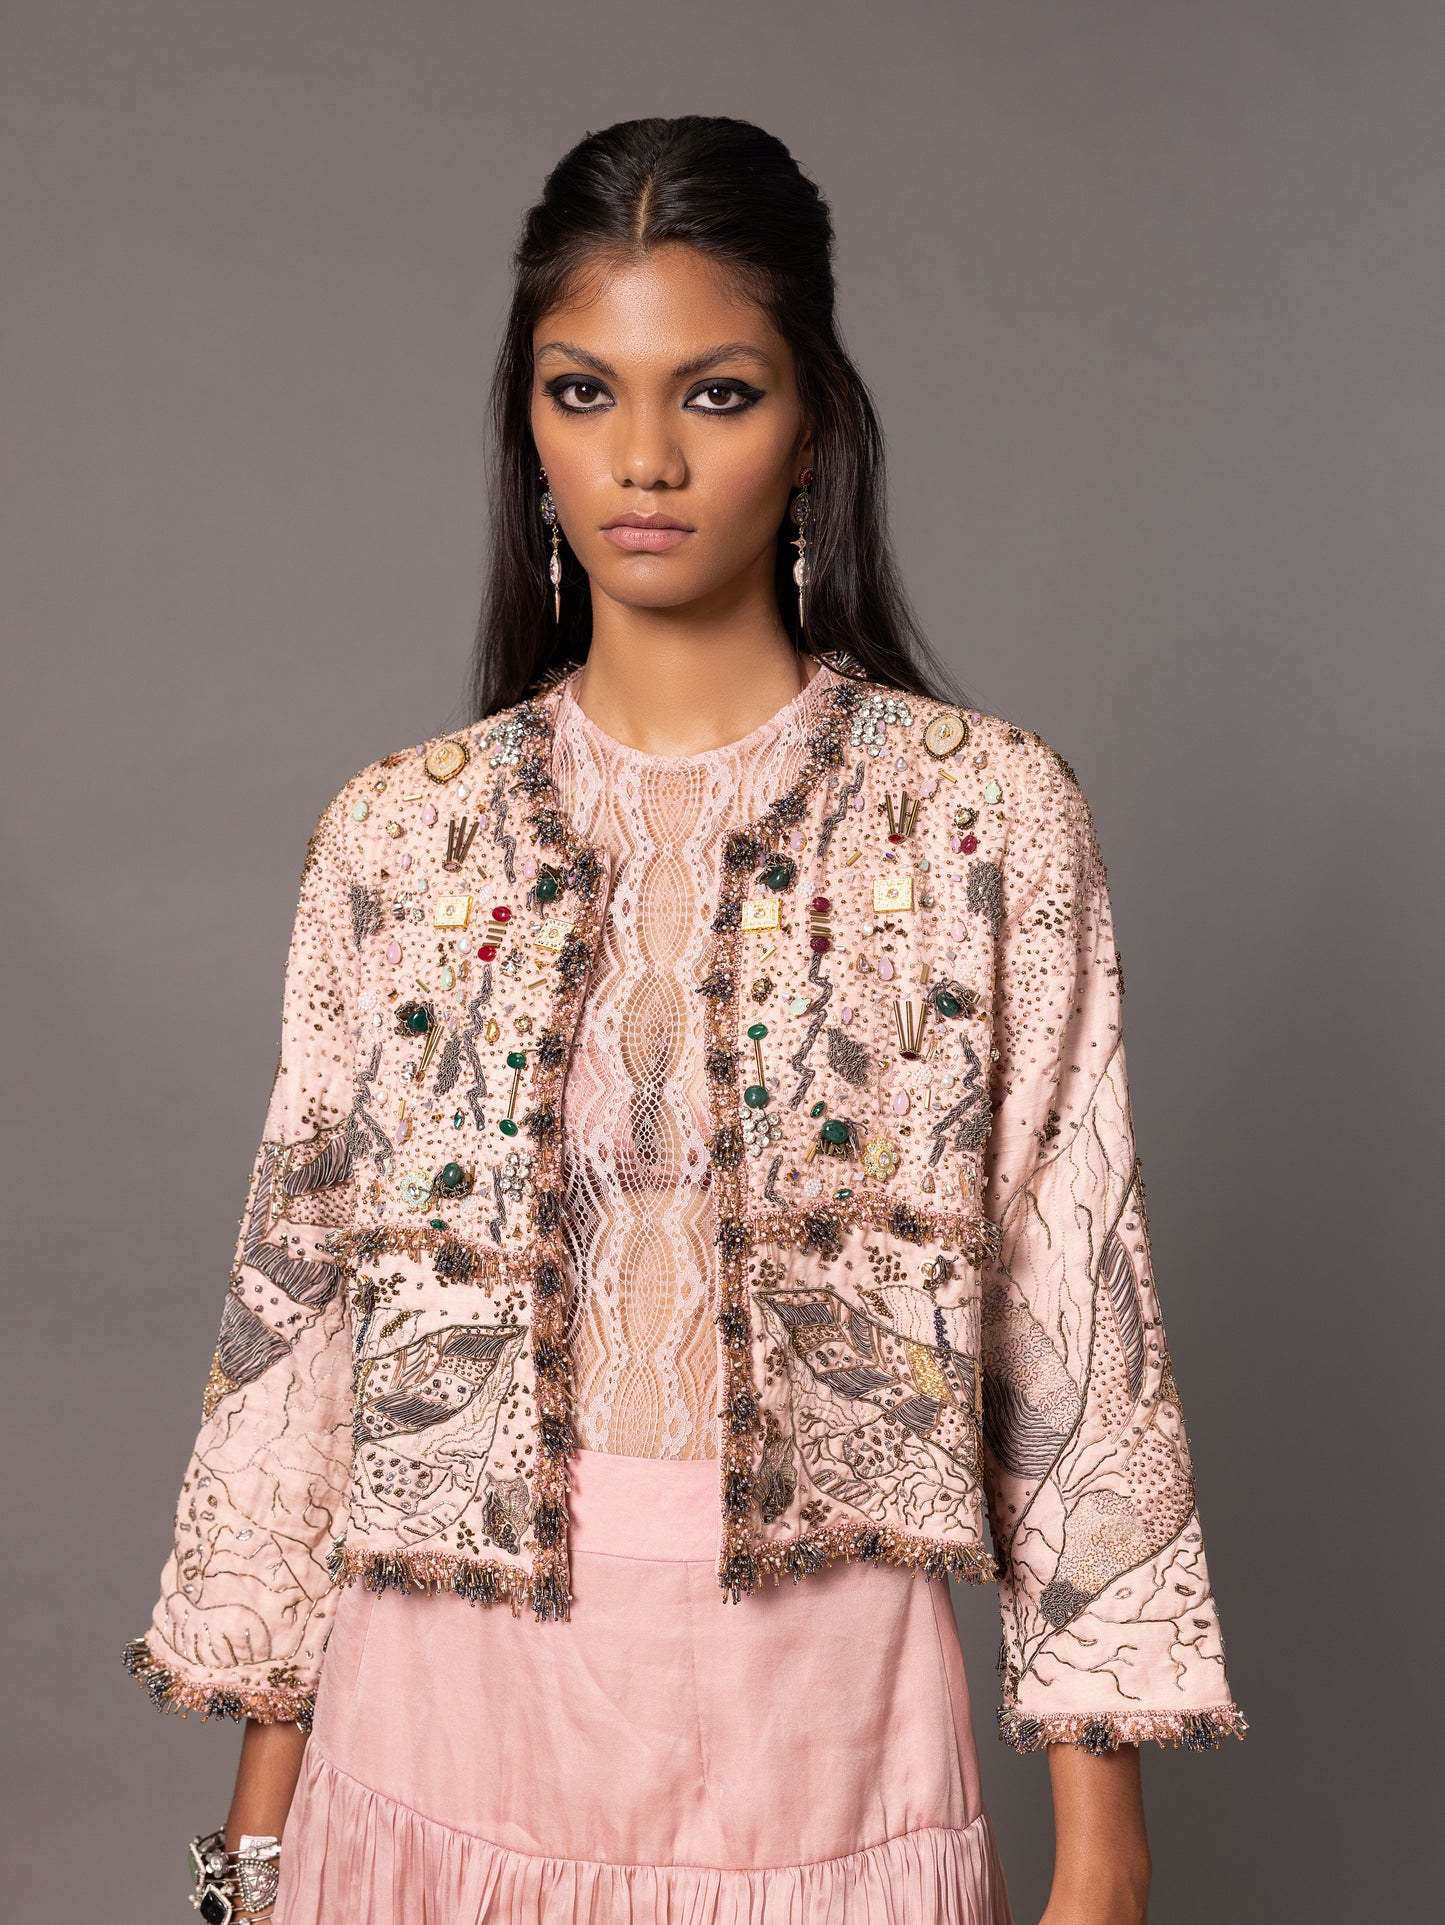 Sang-E-Sitara Pink Jacket, Lace Leotard And Chand Baori Skirt Set